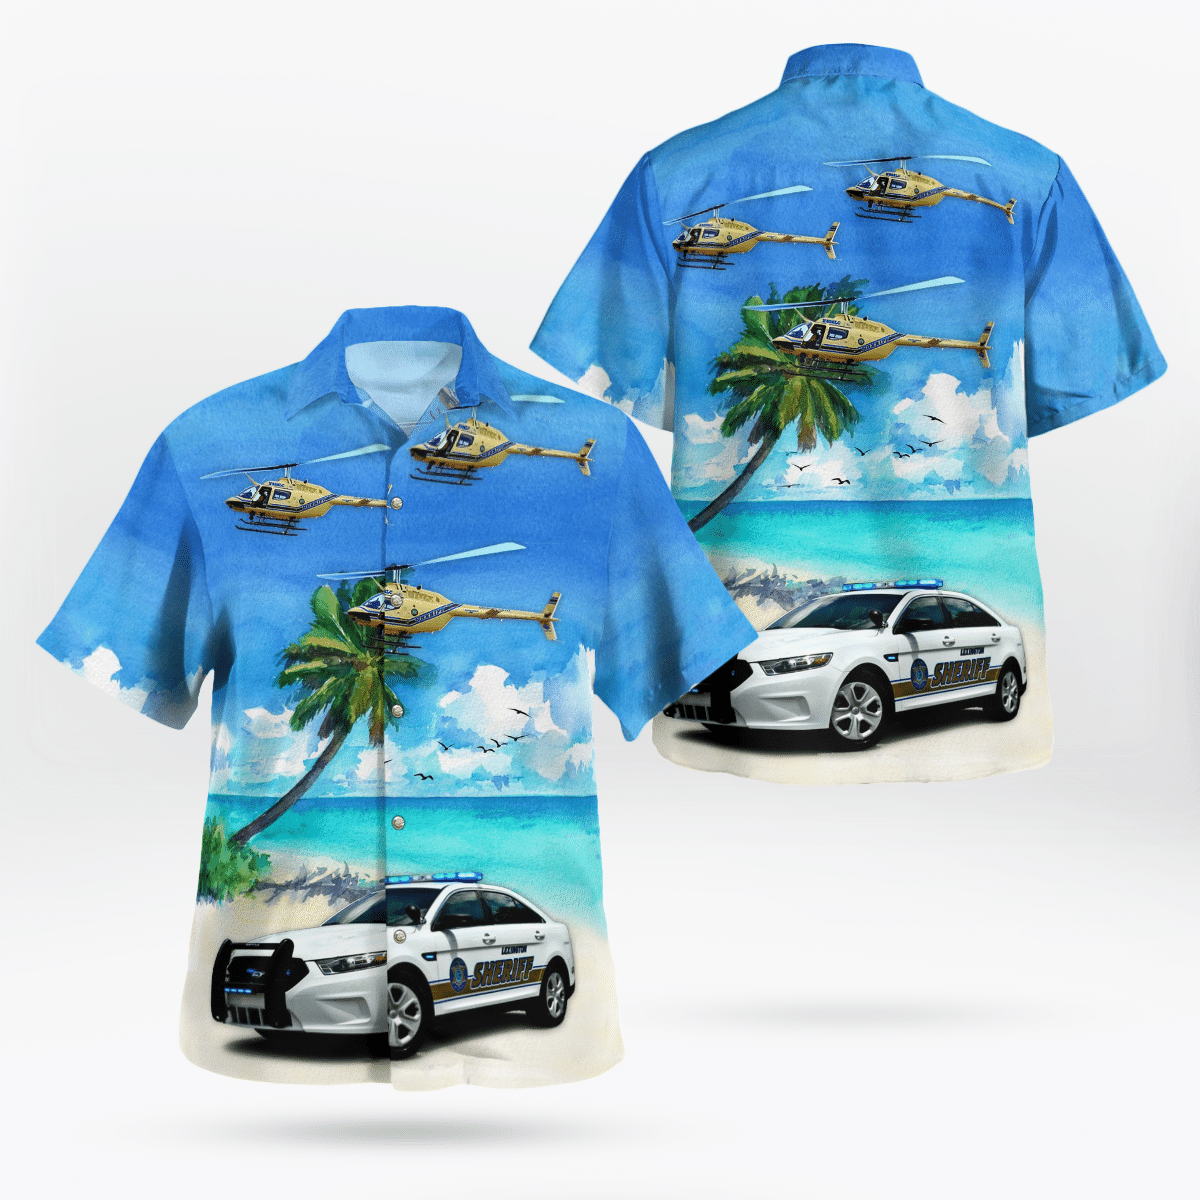 Get a new Hawaiian shirt to enjoy summer vacation 267